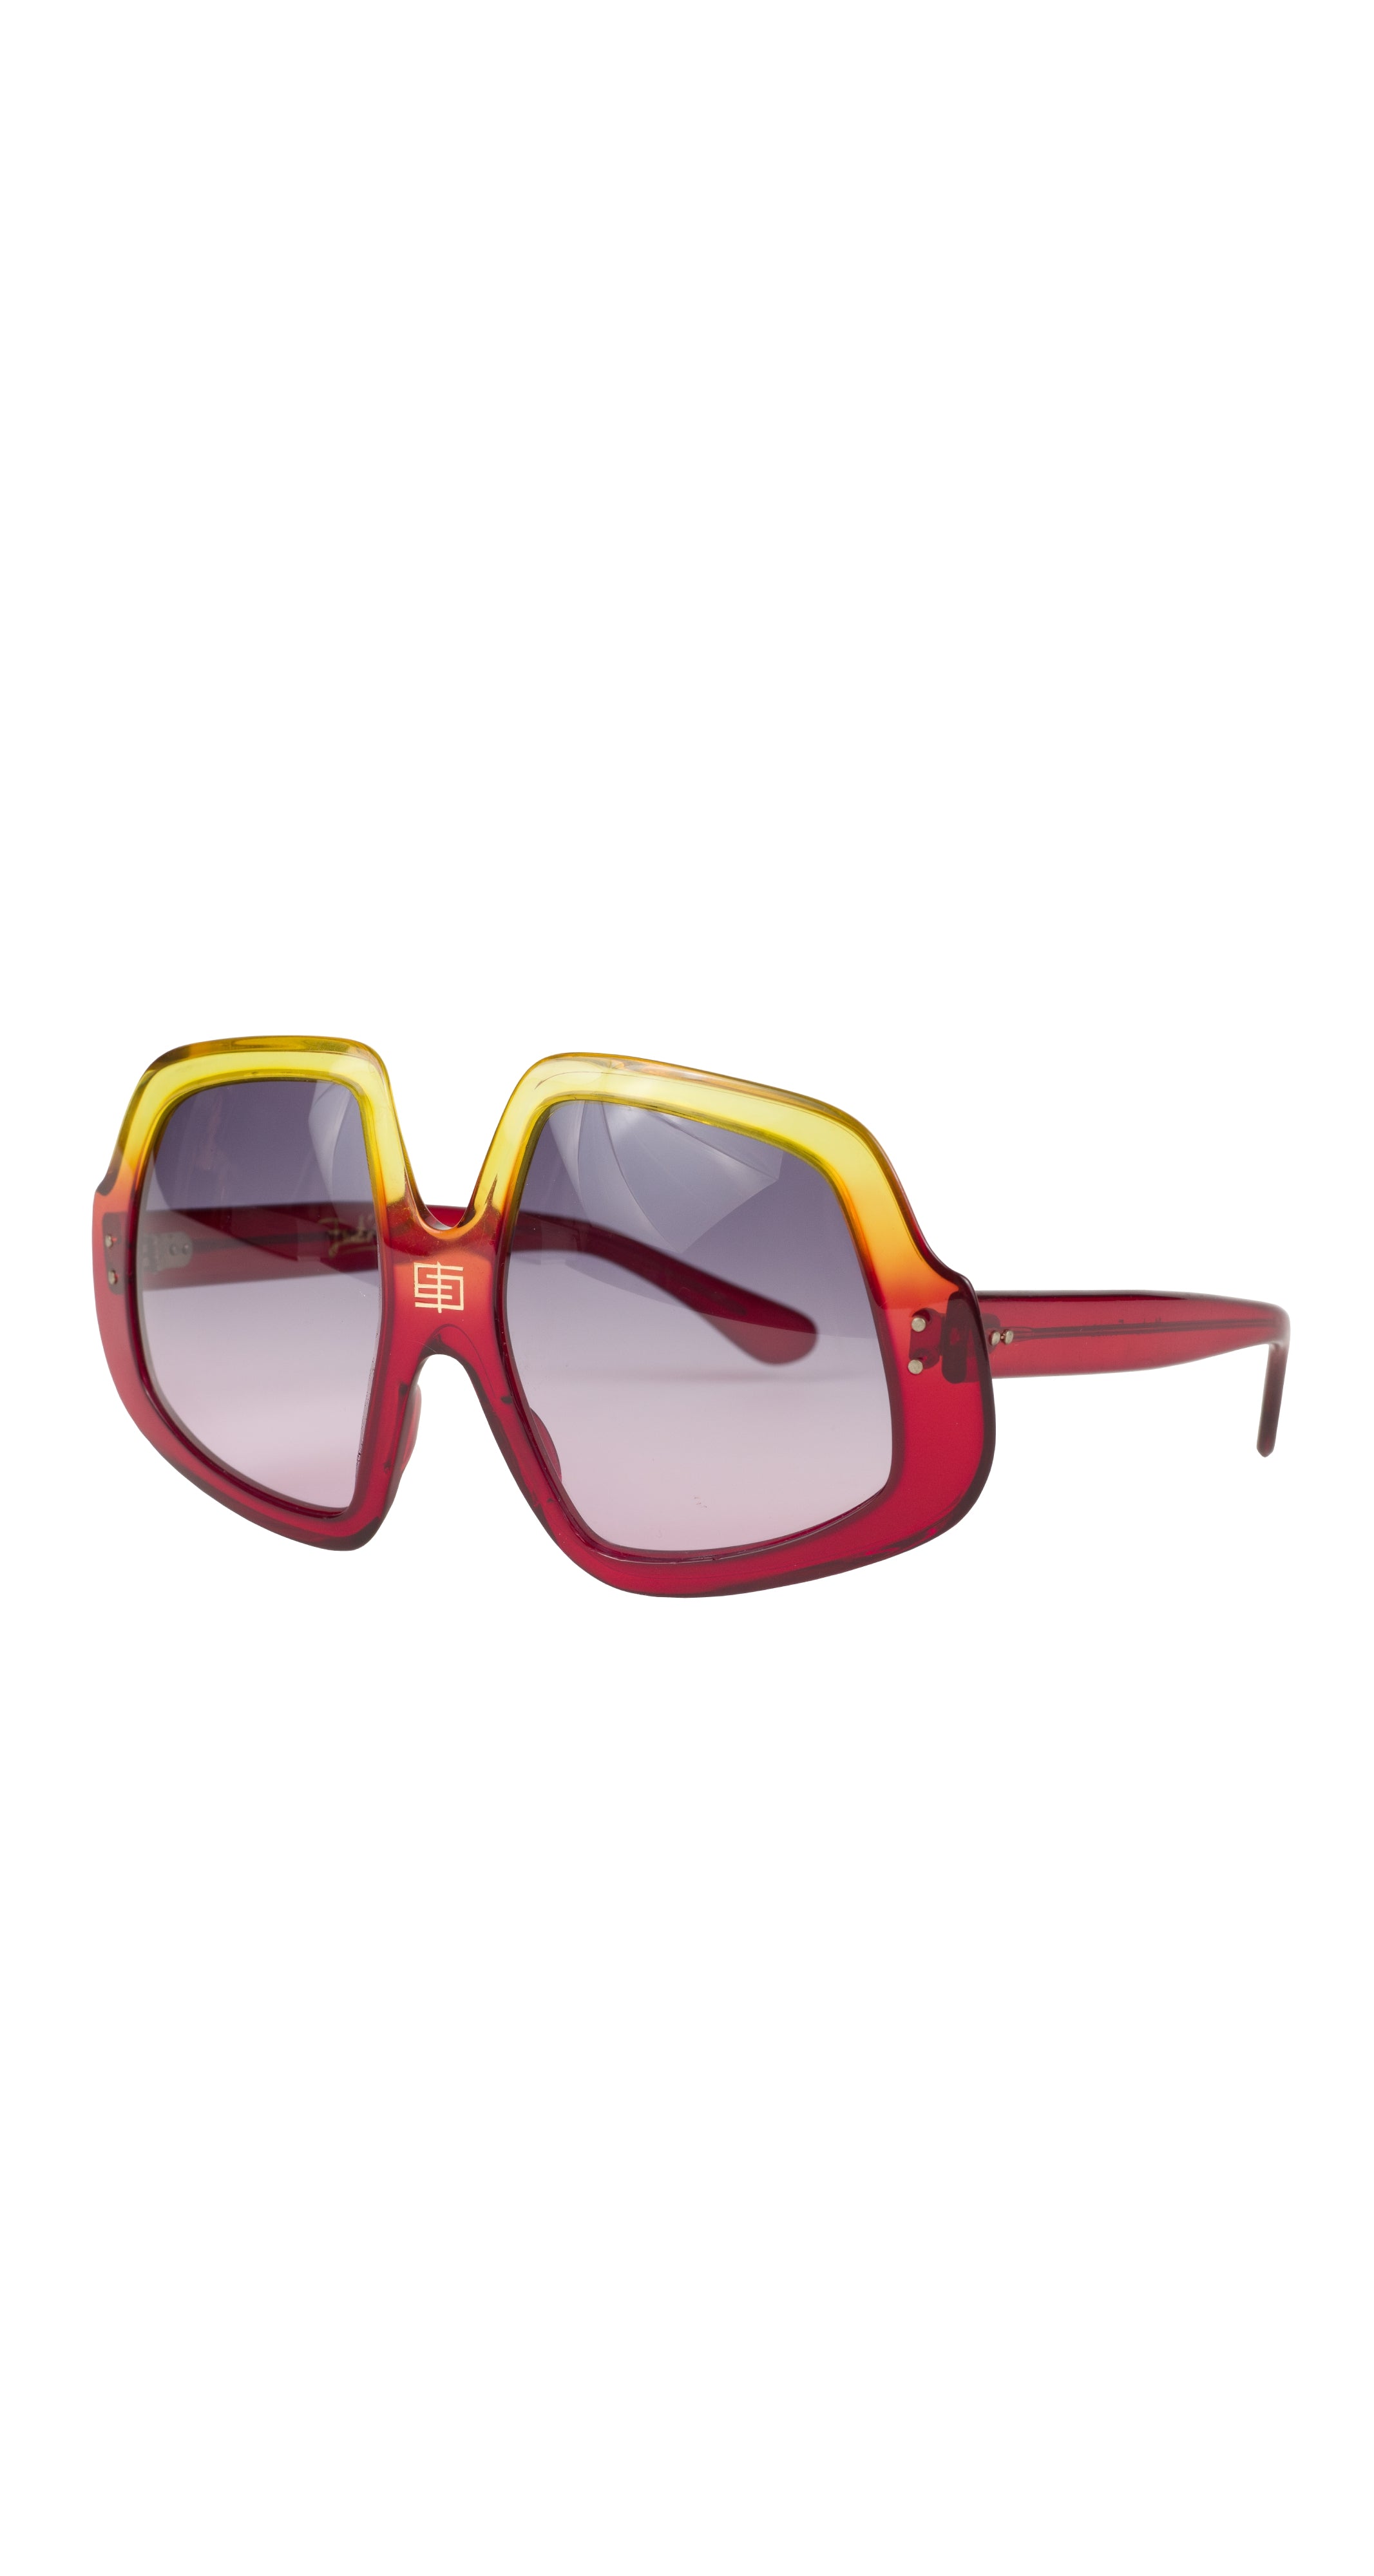 1970s Red & Yellow Gradient Oversized Sunglasses